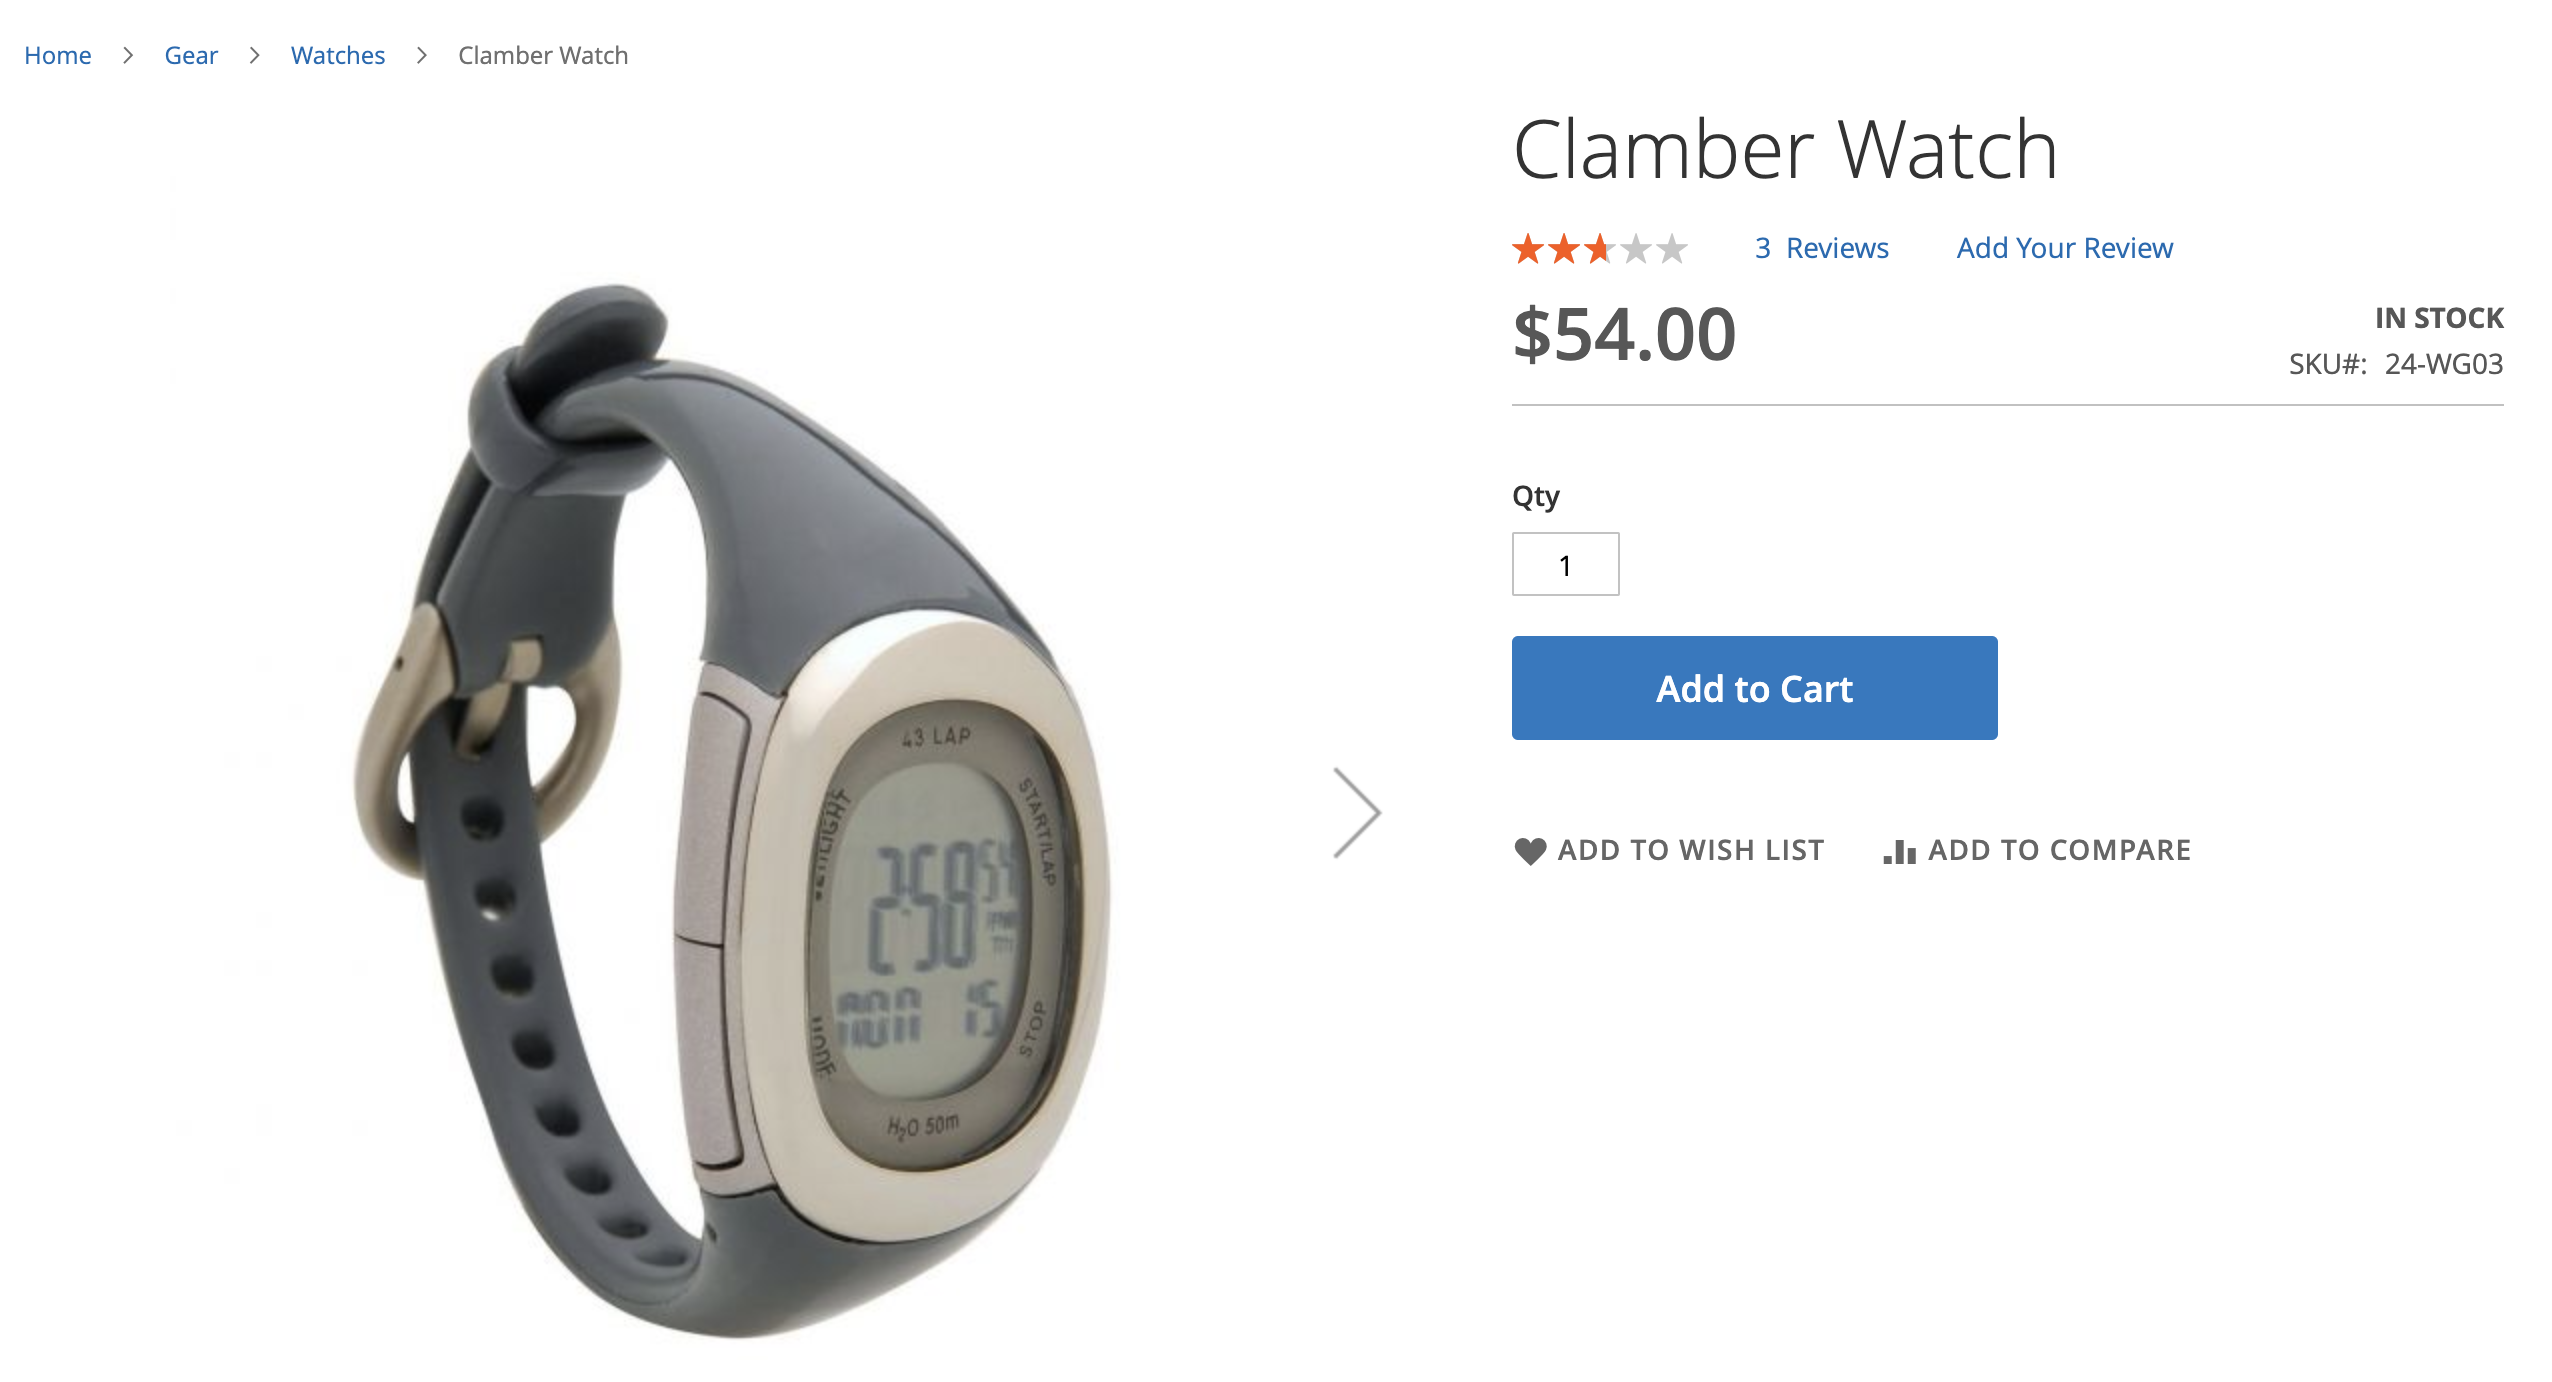 Clamber Watch